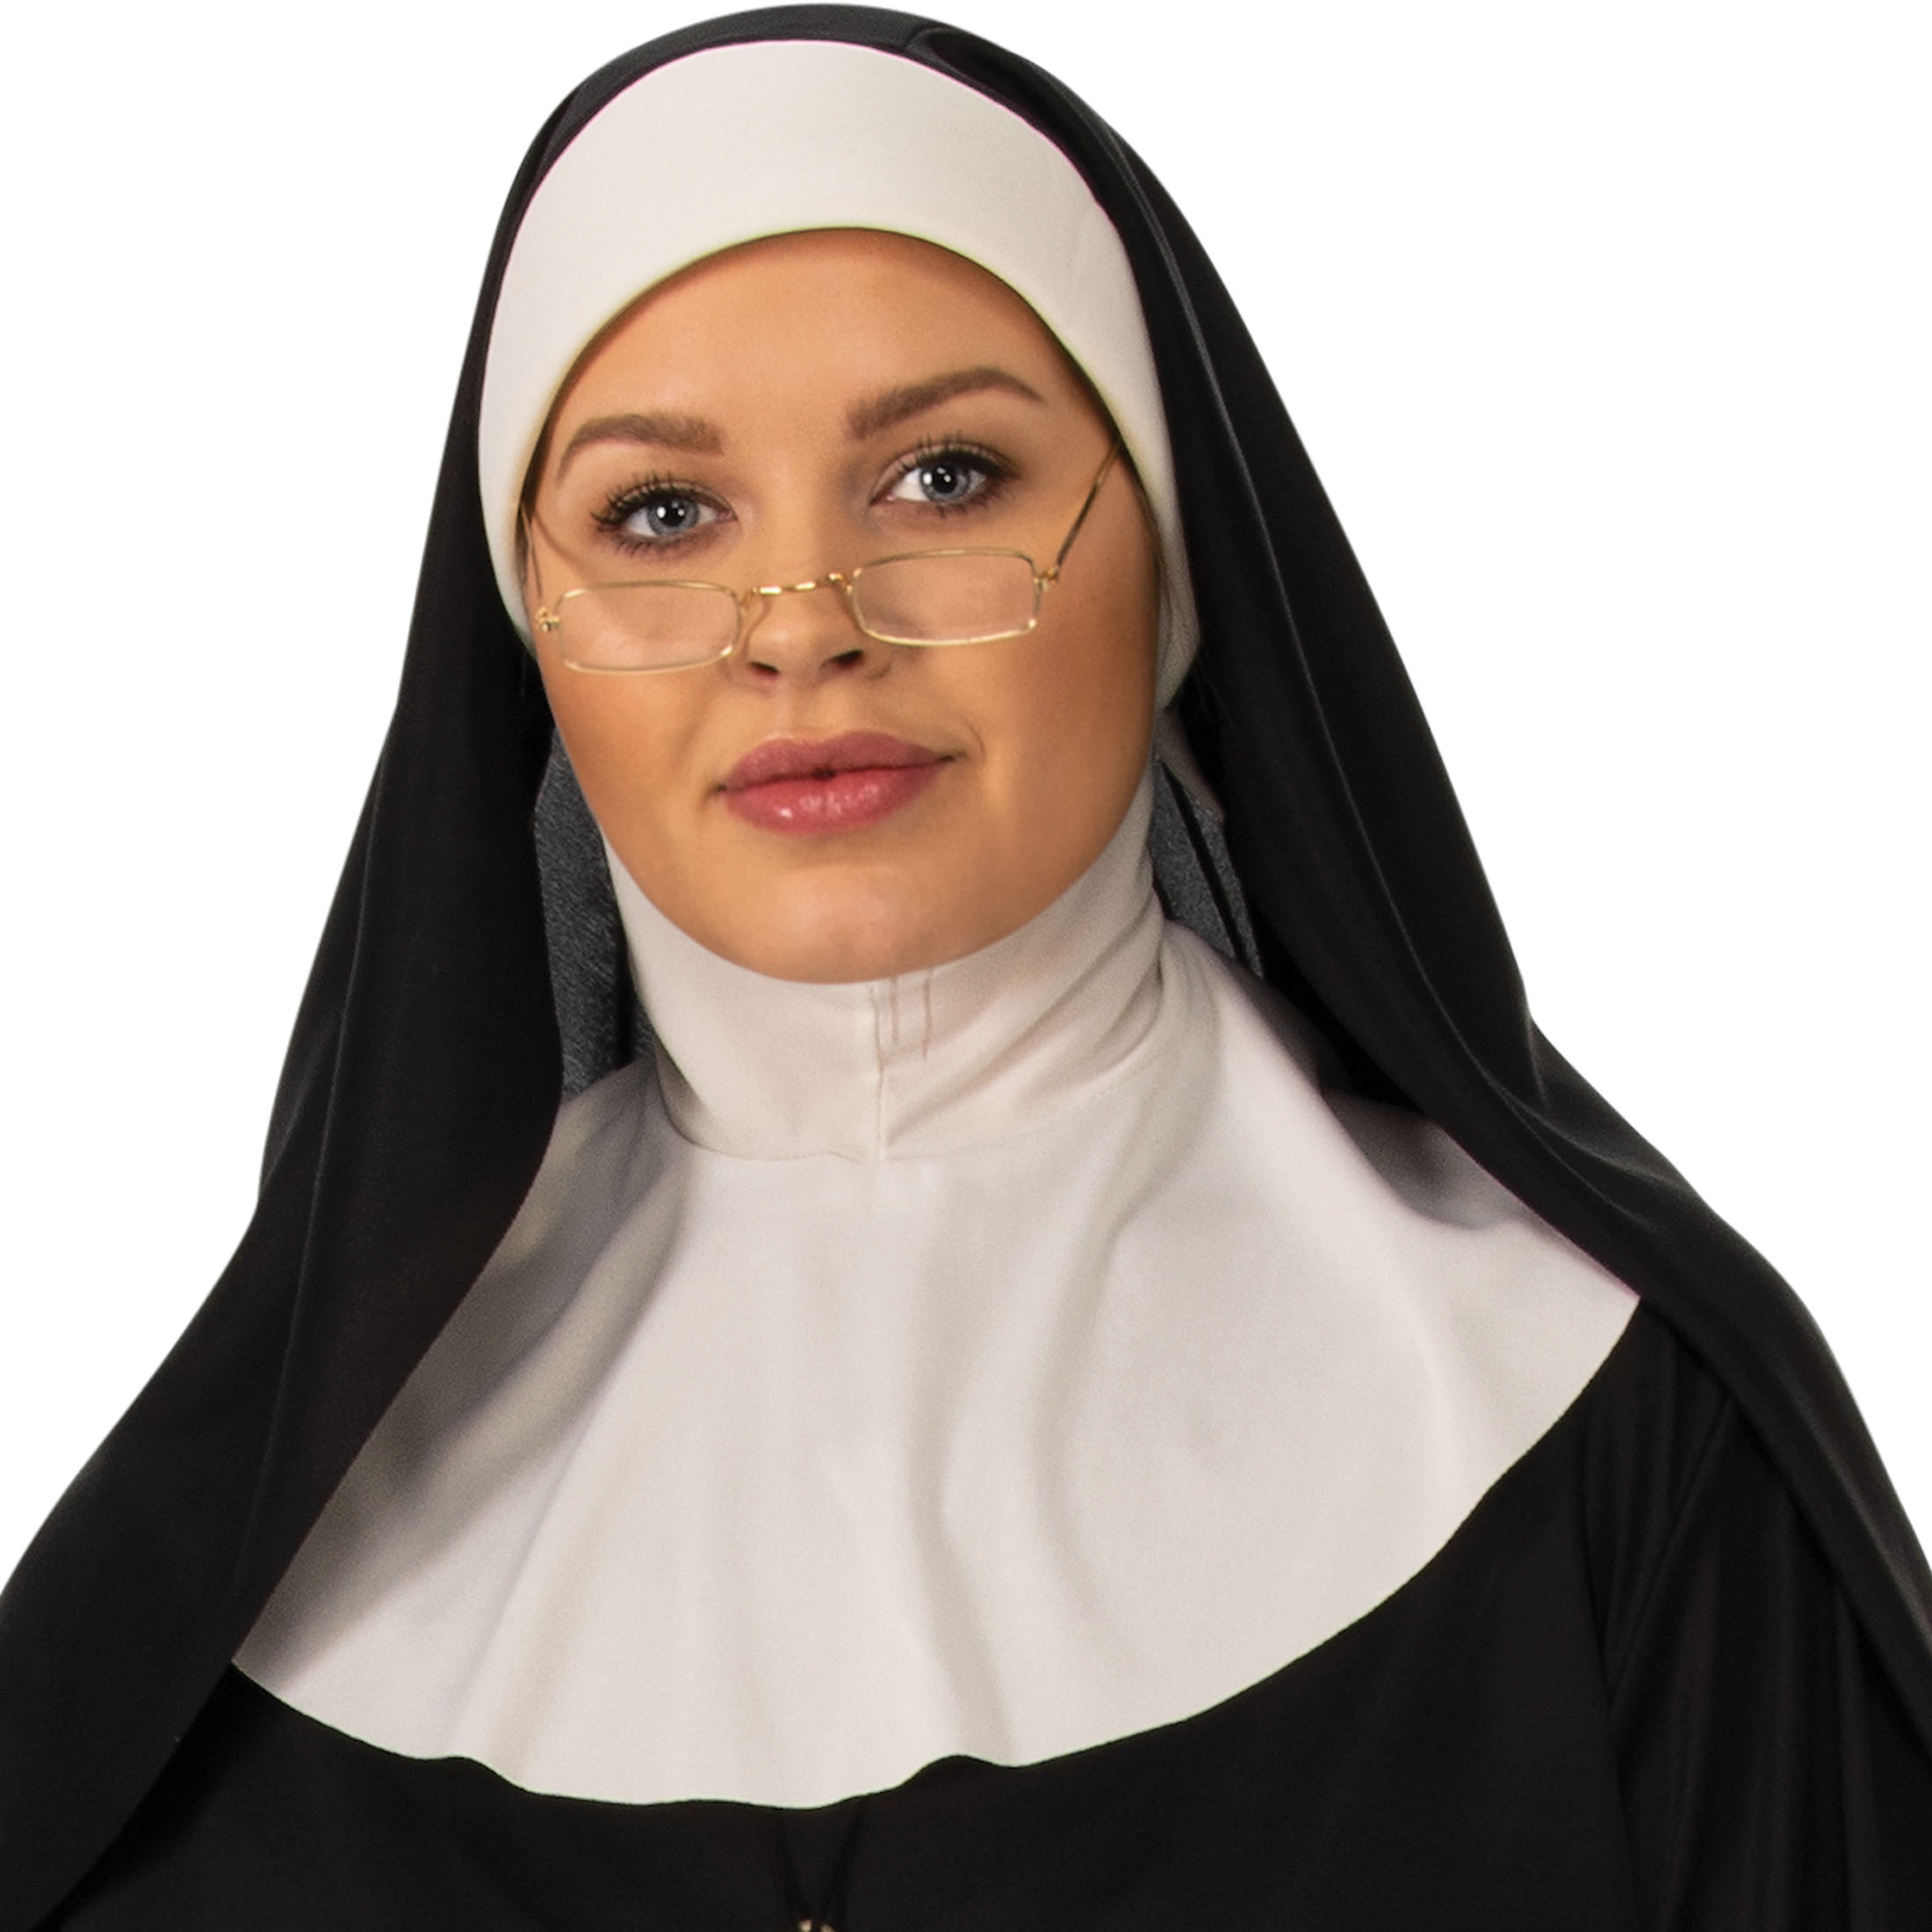 Nun Adult Women's Halloween Costume XXL By Rubies II - image 2 of 7